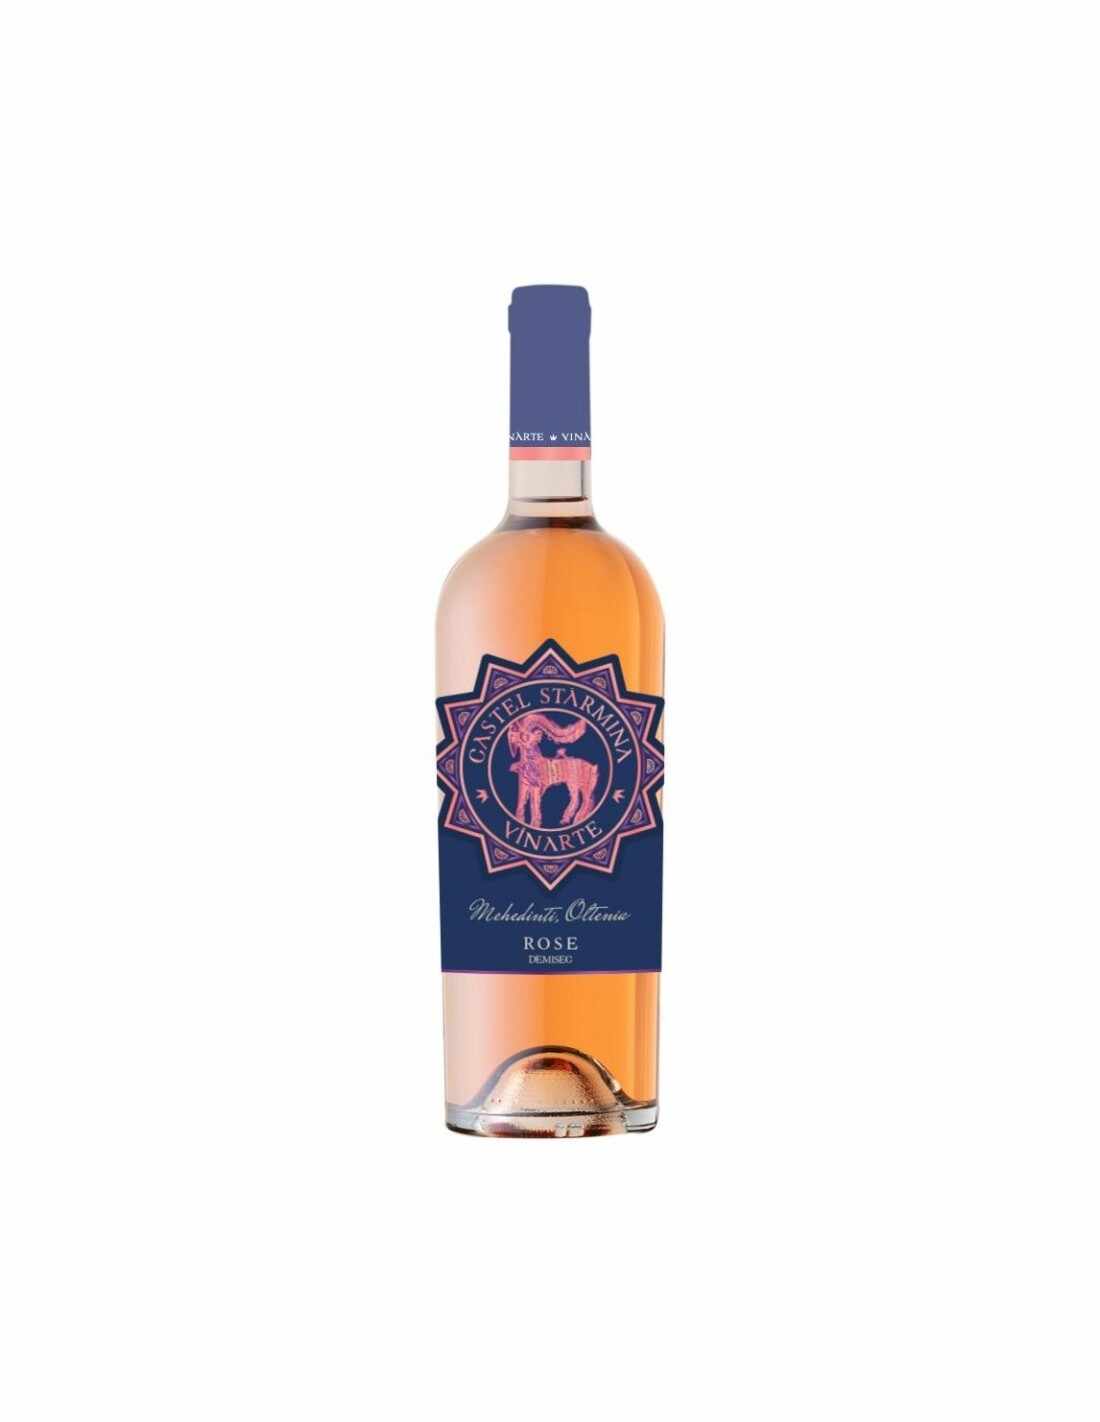 Vin roze demisec, Cupaj, Castel Starmina Vinarte, 12% alc., 0.75L, Romania